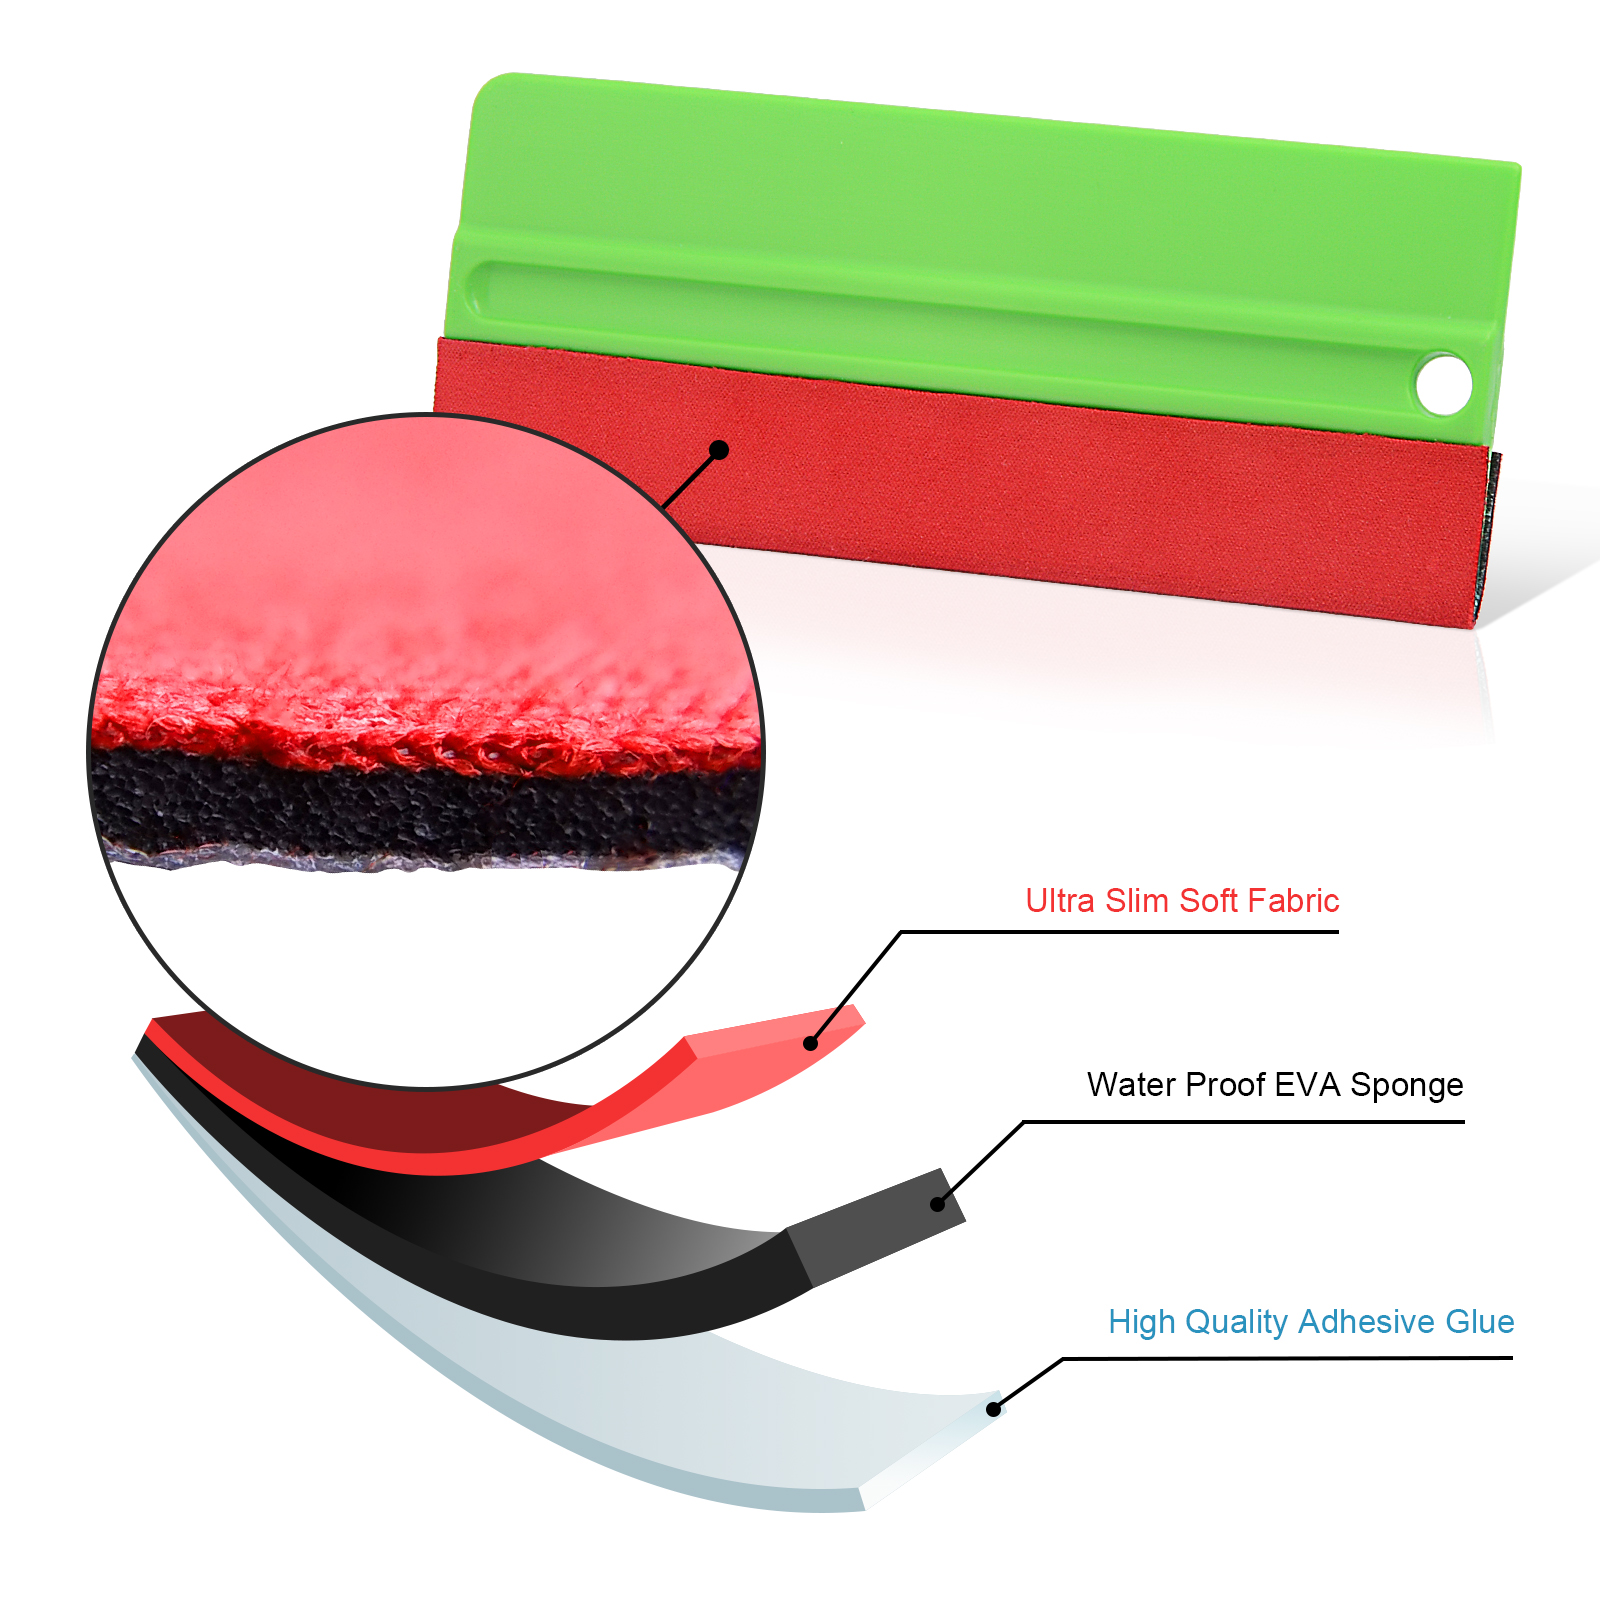 FOSHIO Vinyl Car Wrap Tool Kit 50M Knifeless Tape Design Line Carbon Film Squeegee Scraper Sticker Wrapping Kit Auto Accessories